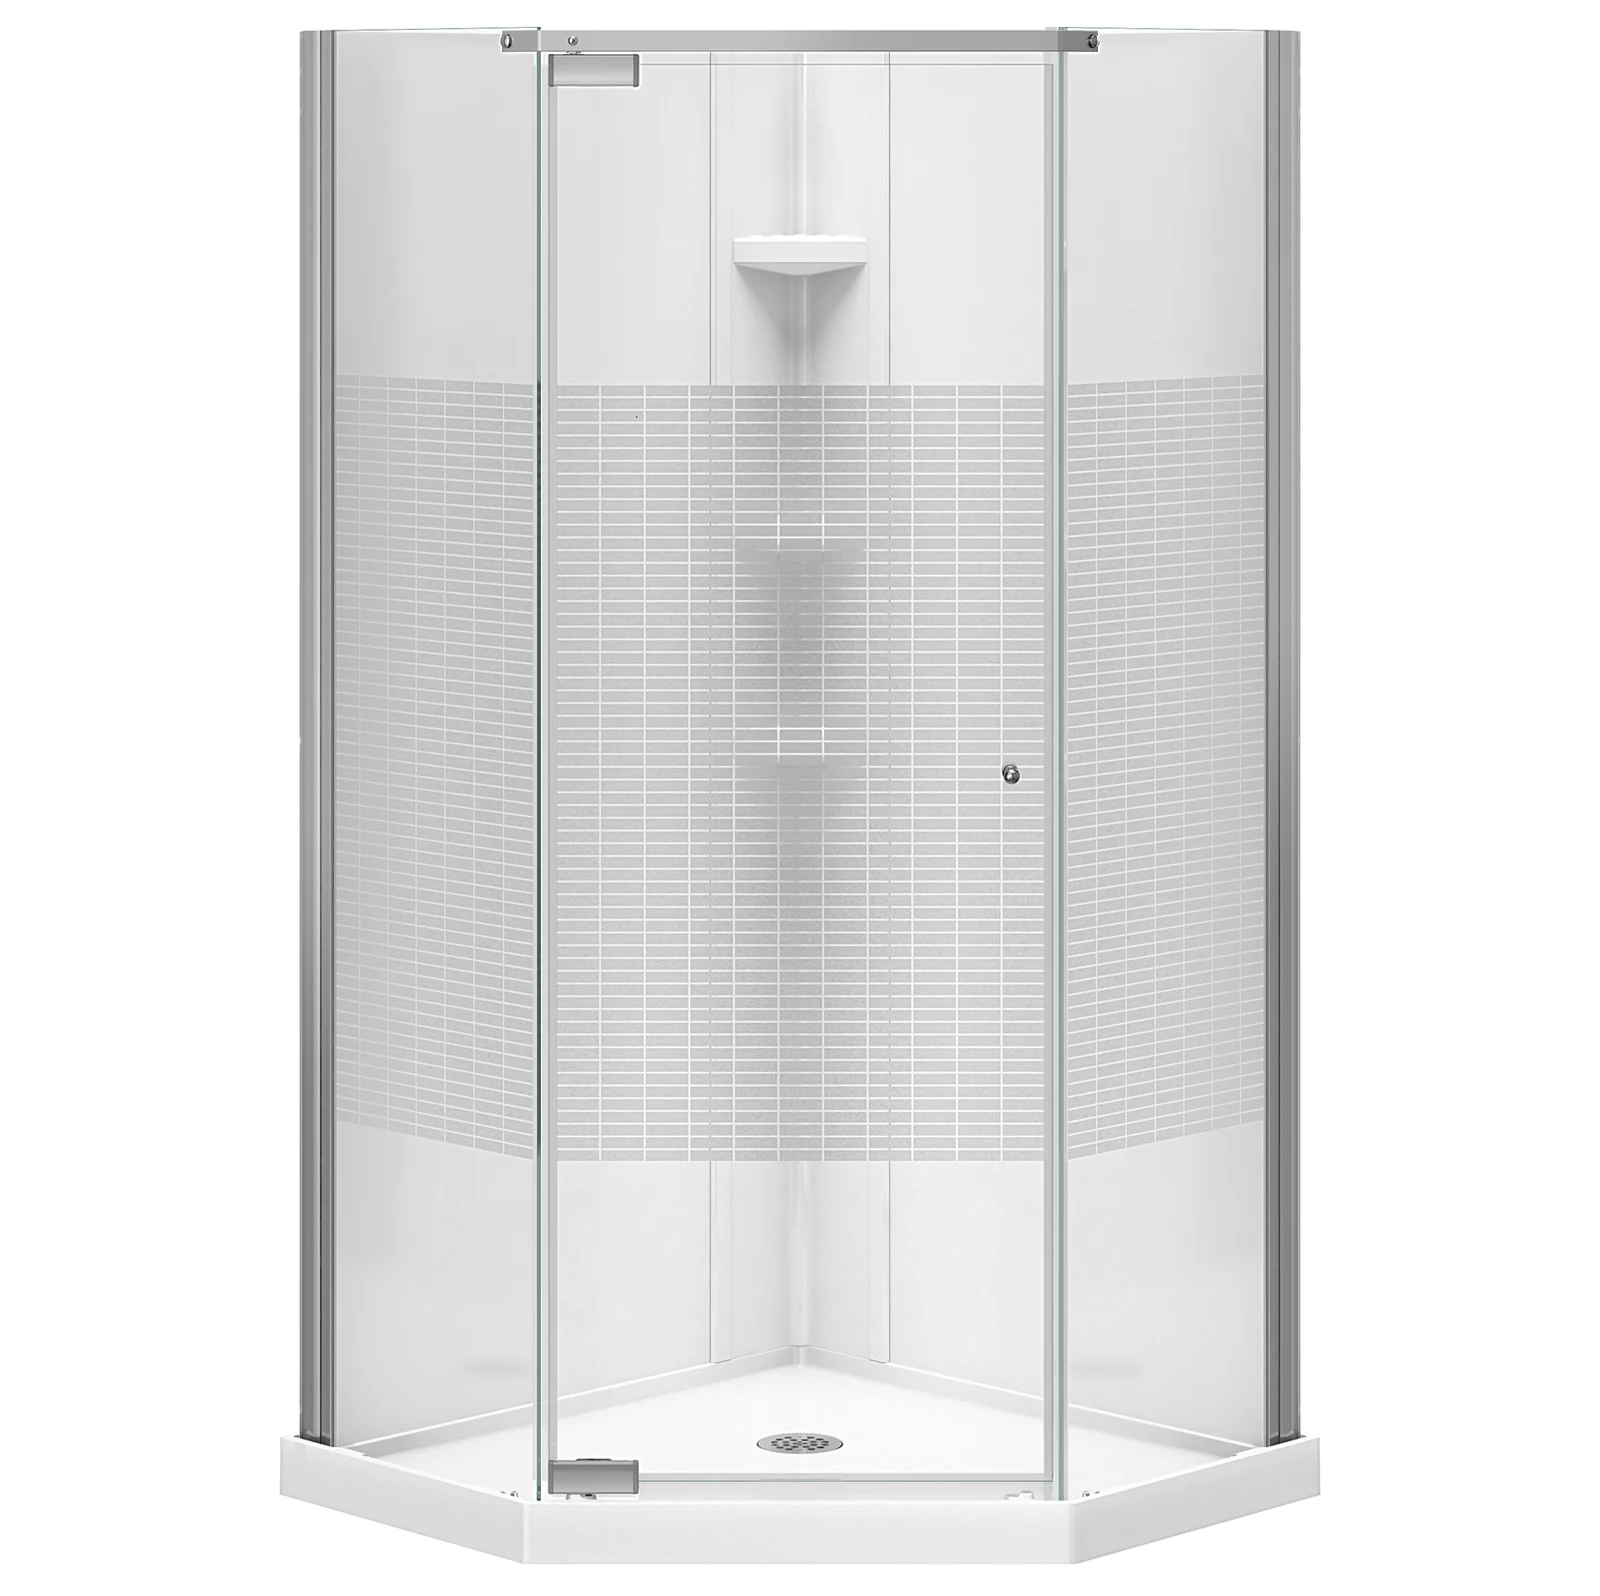 Une cabine de douche en polystyrène